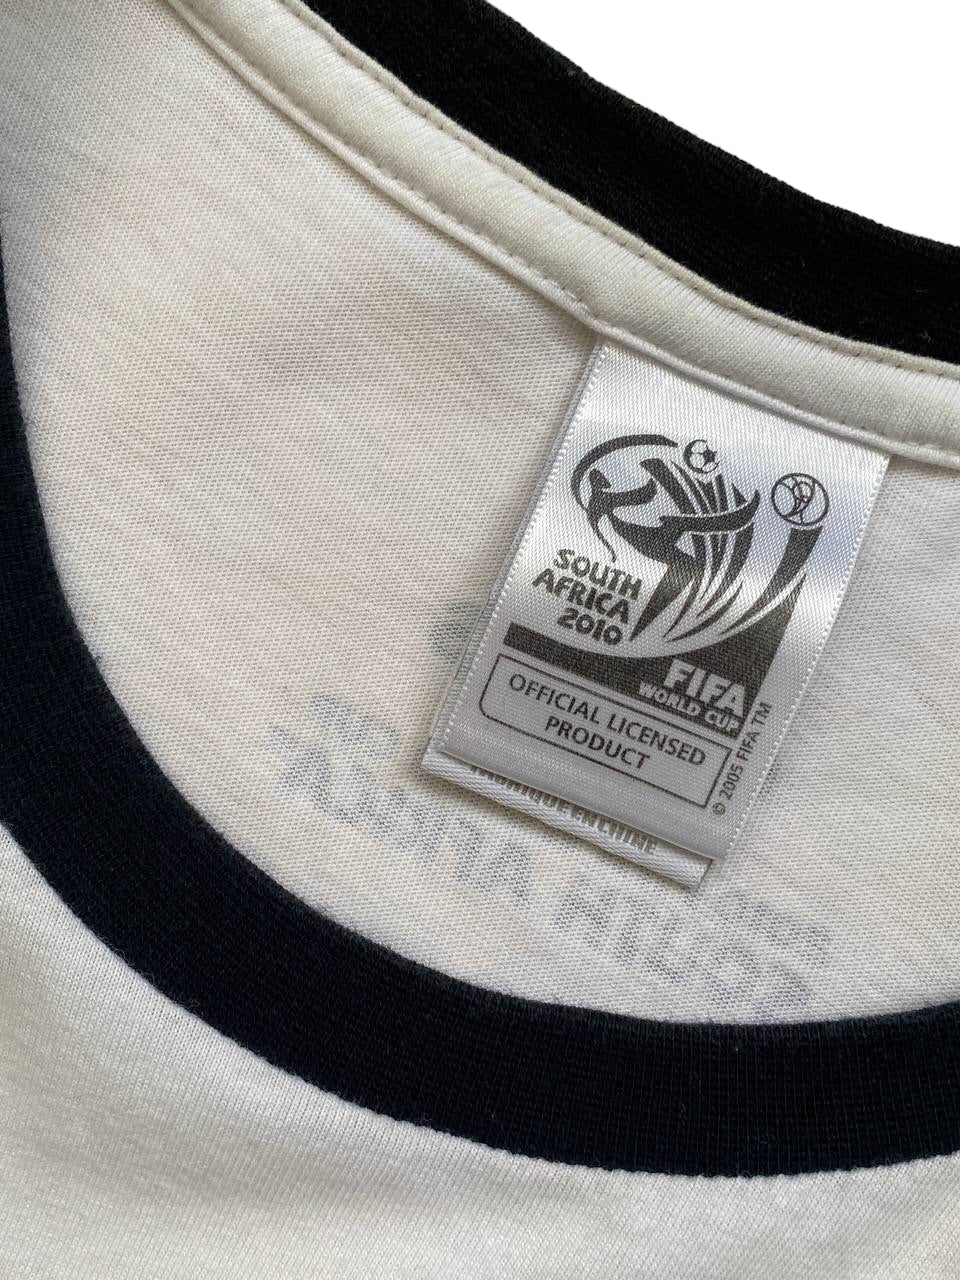 T-Shirt Adidas FIFA 2010 Germany - L